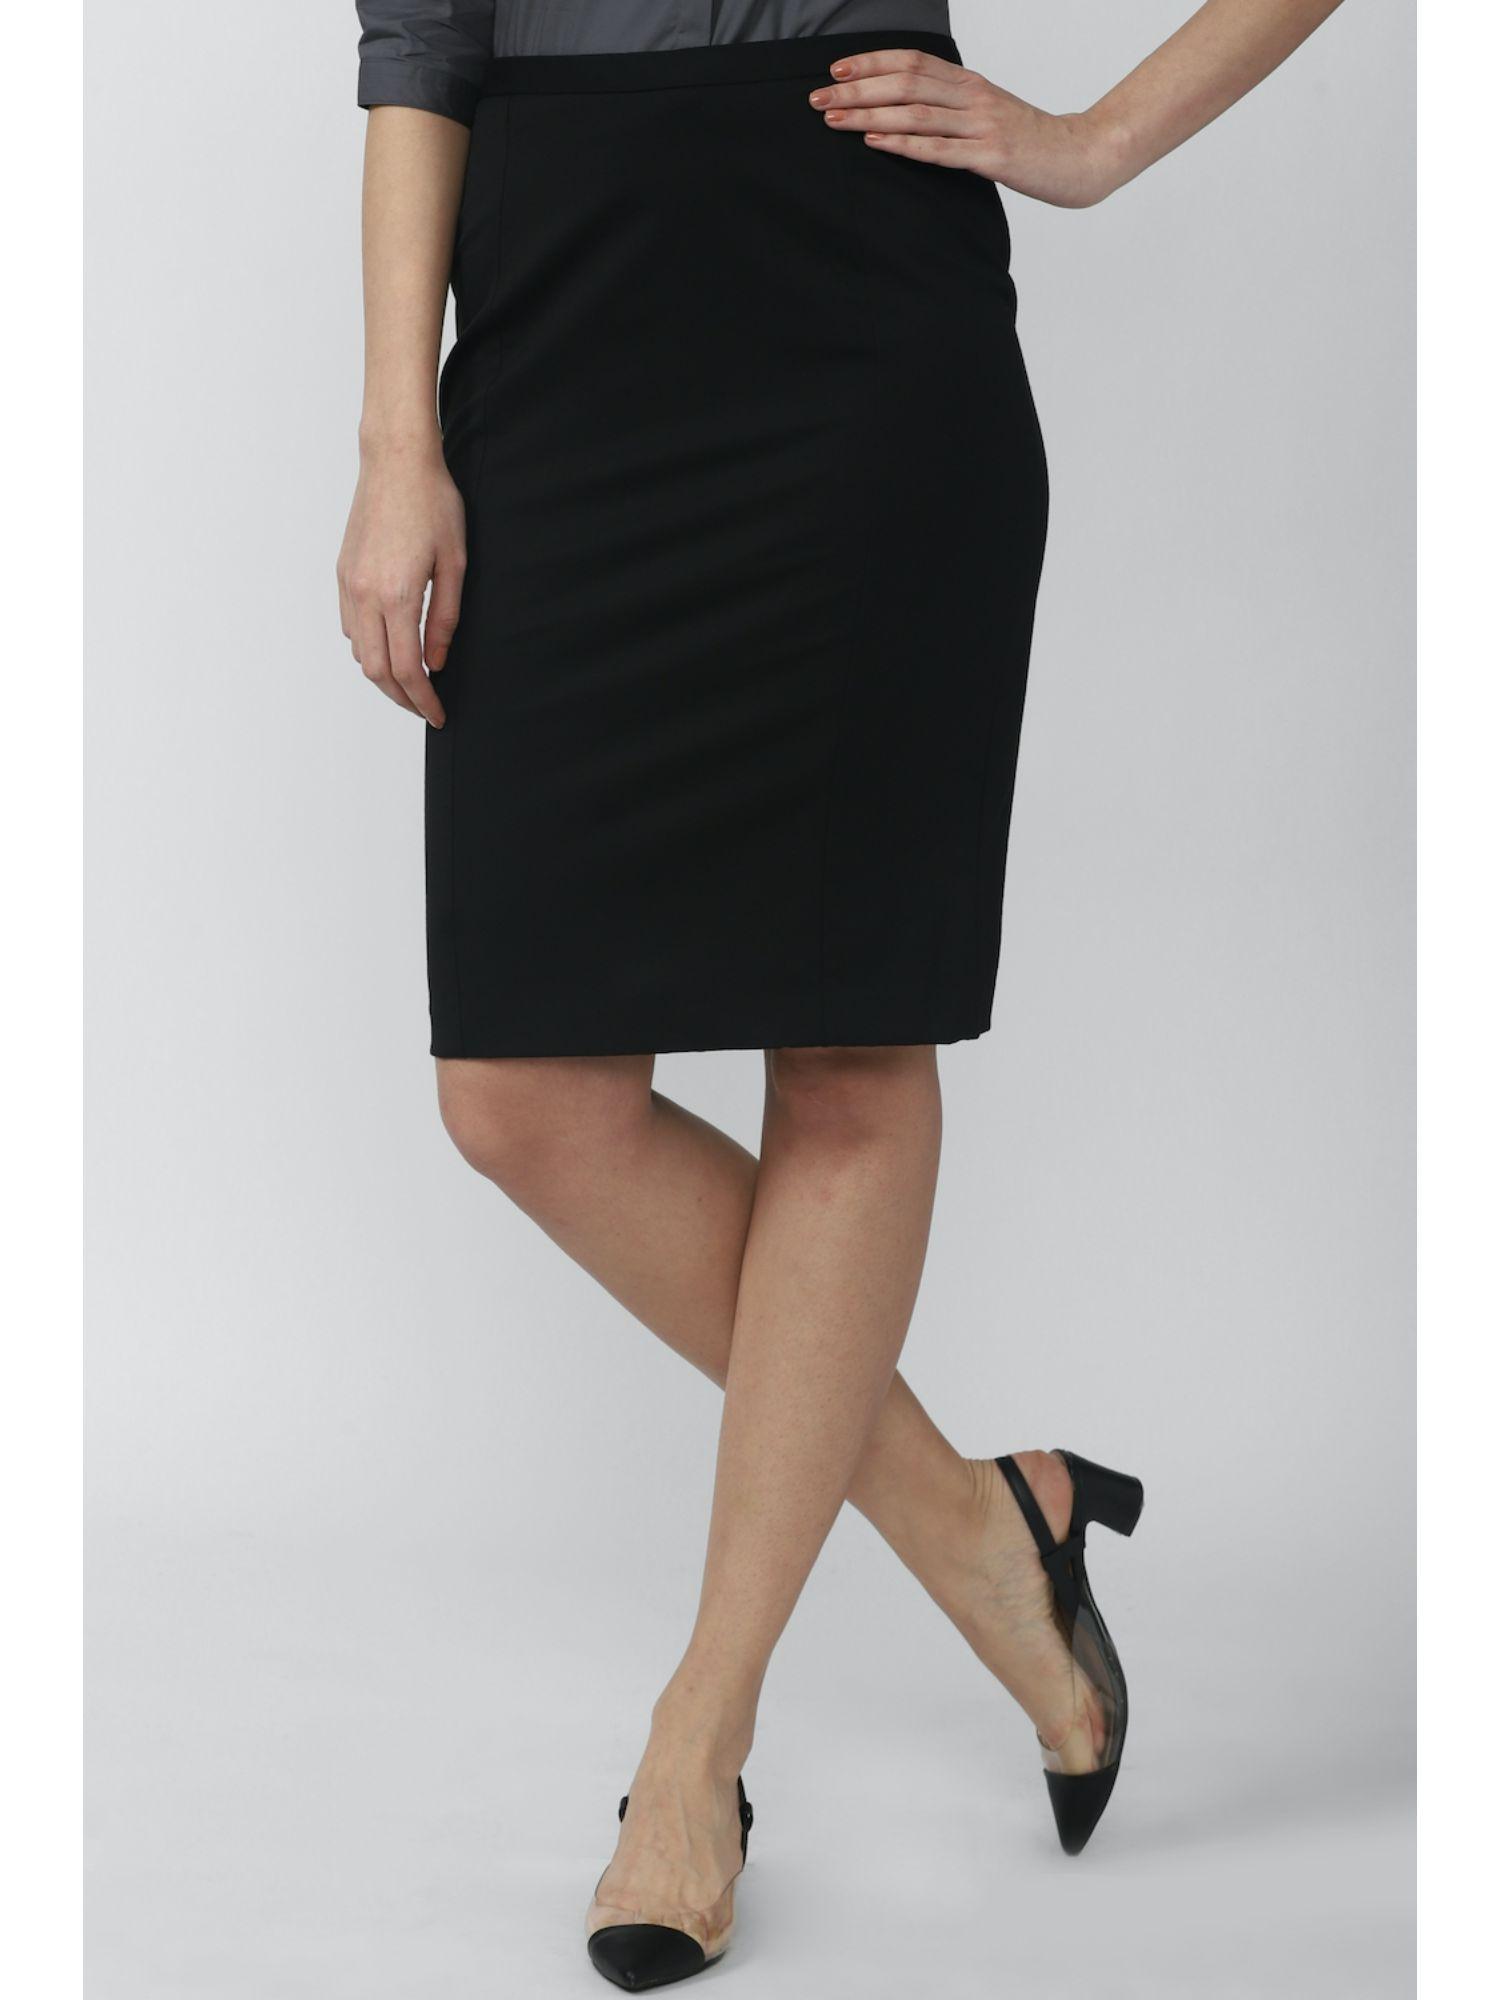 black-solid-skirt